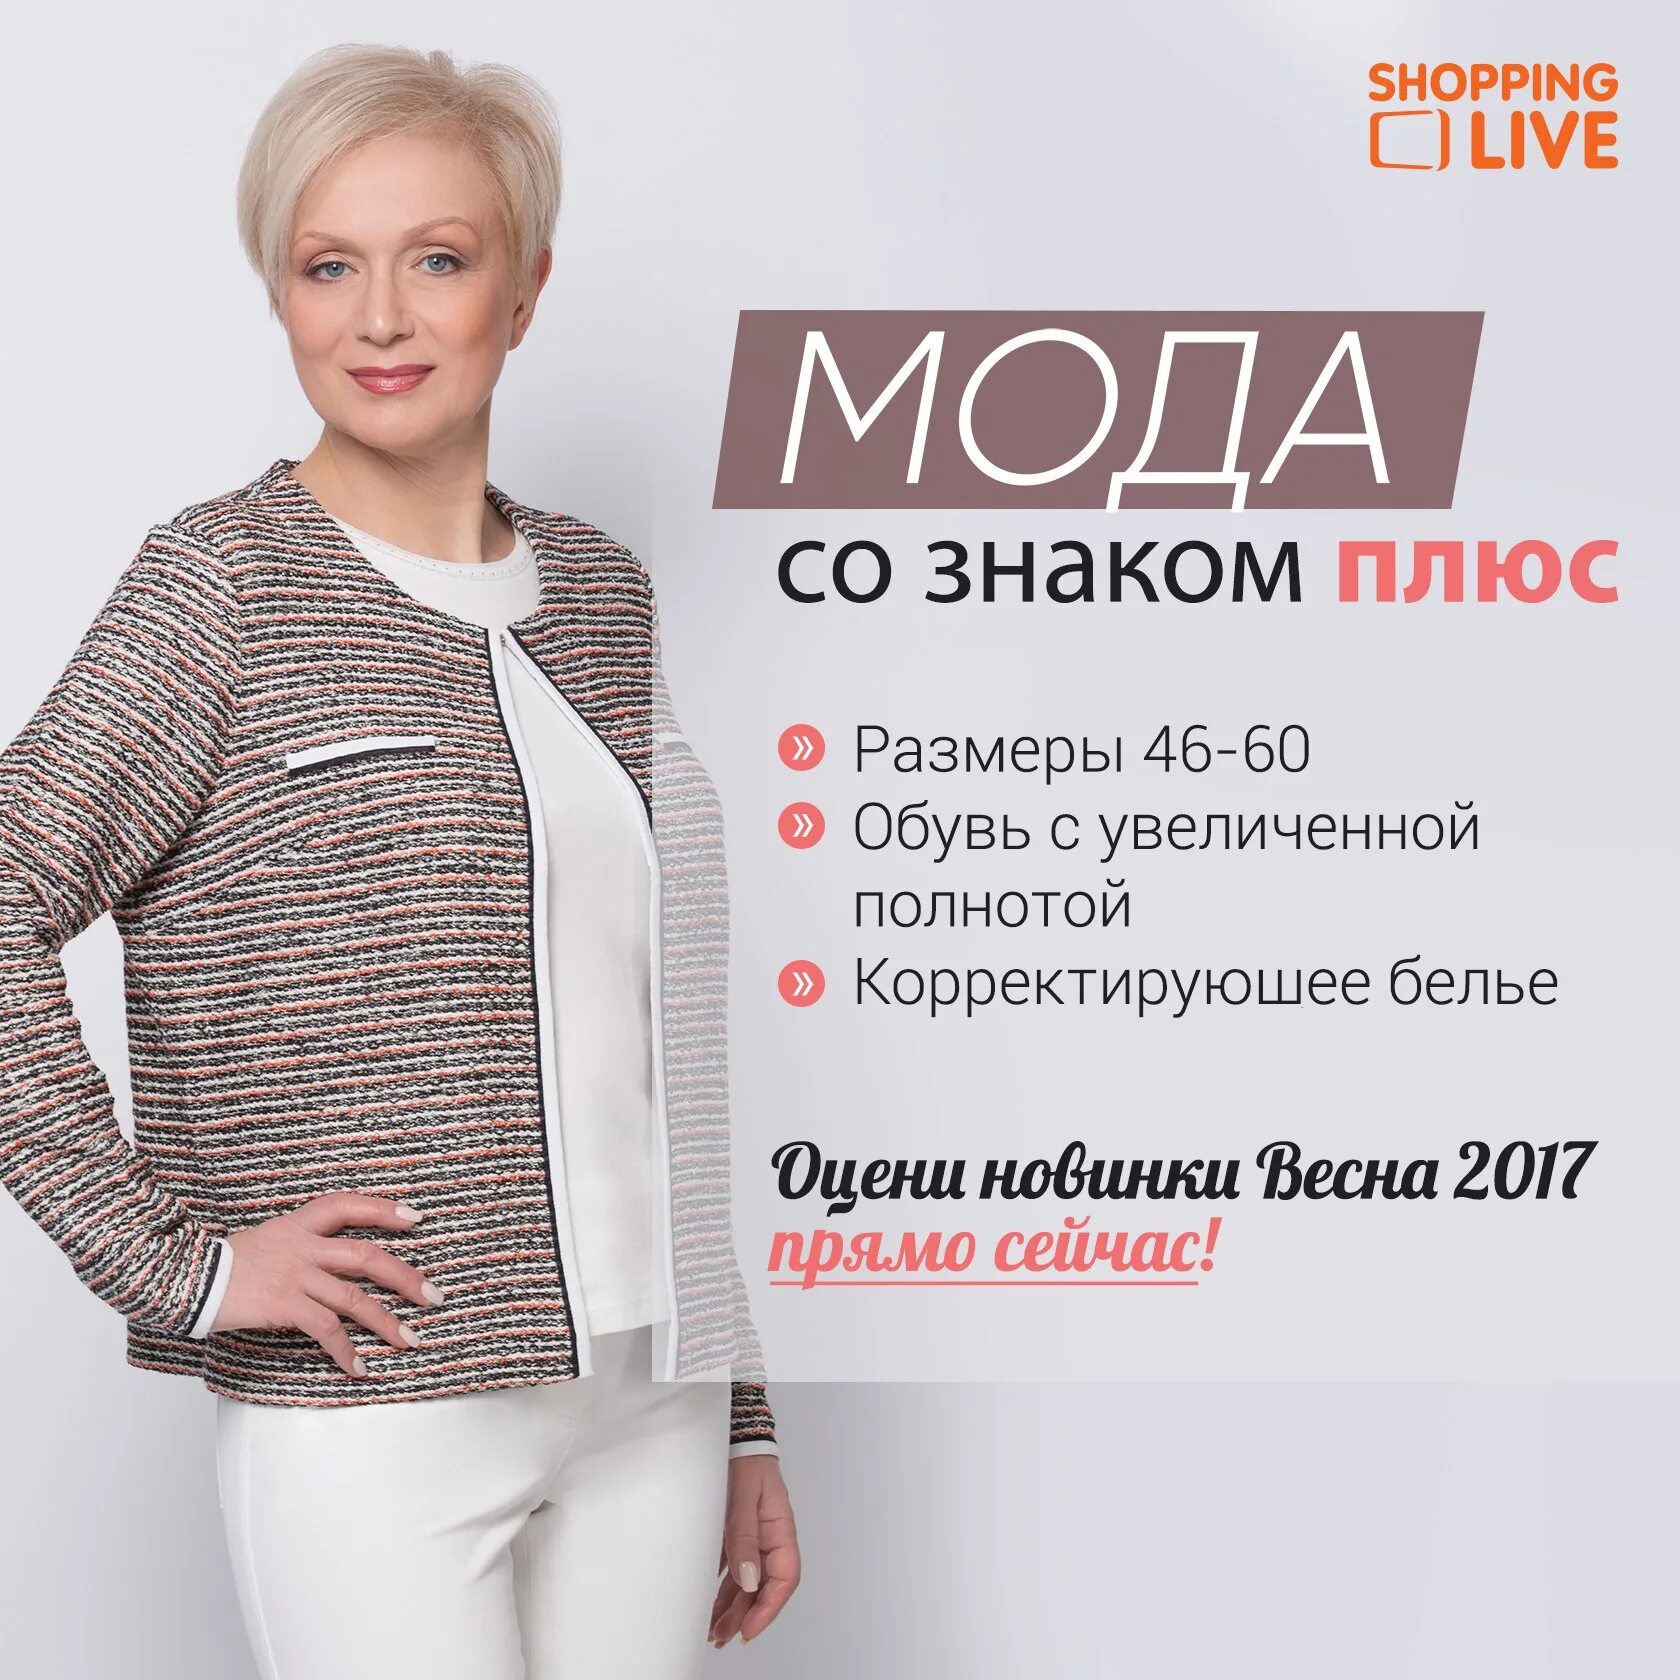 Shopping Live интернет-магазин. Shopping Live интернет магазин каталог. SHOPPINGLIVE.ru интернет магазин. Каталог одежды. Канал shopping live